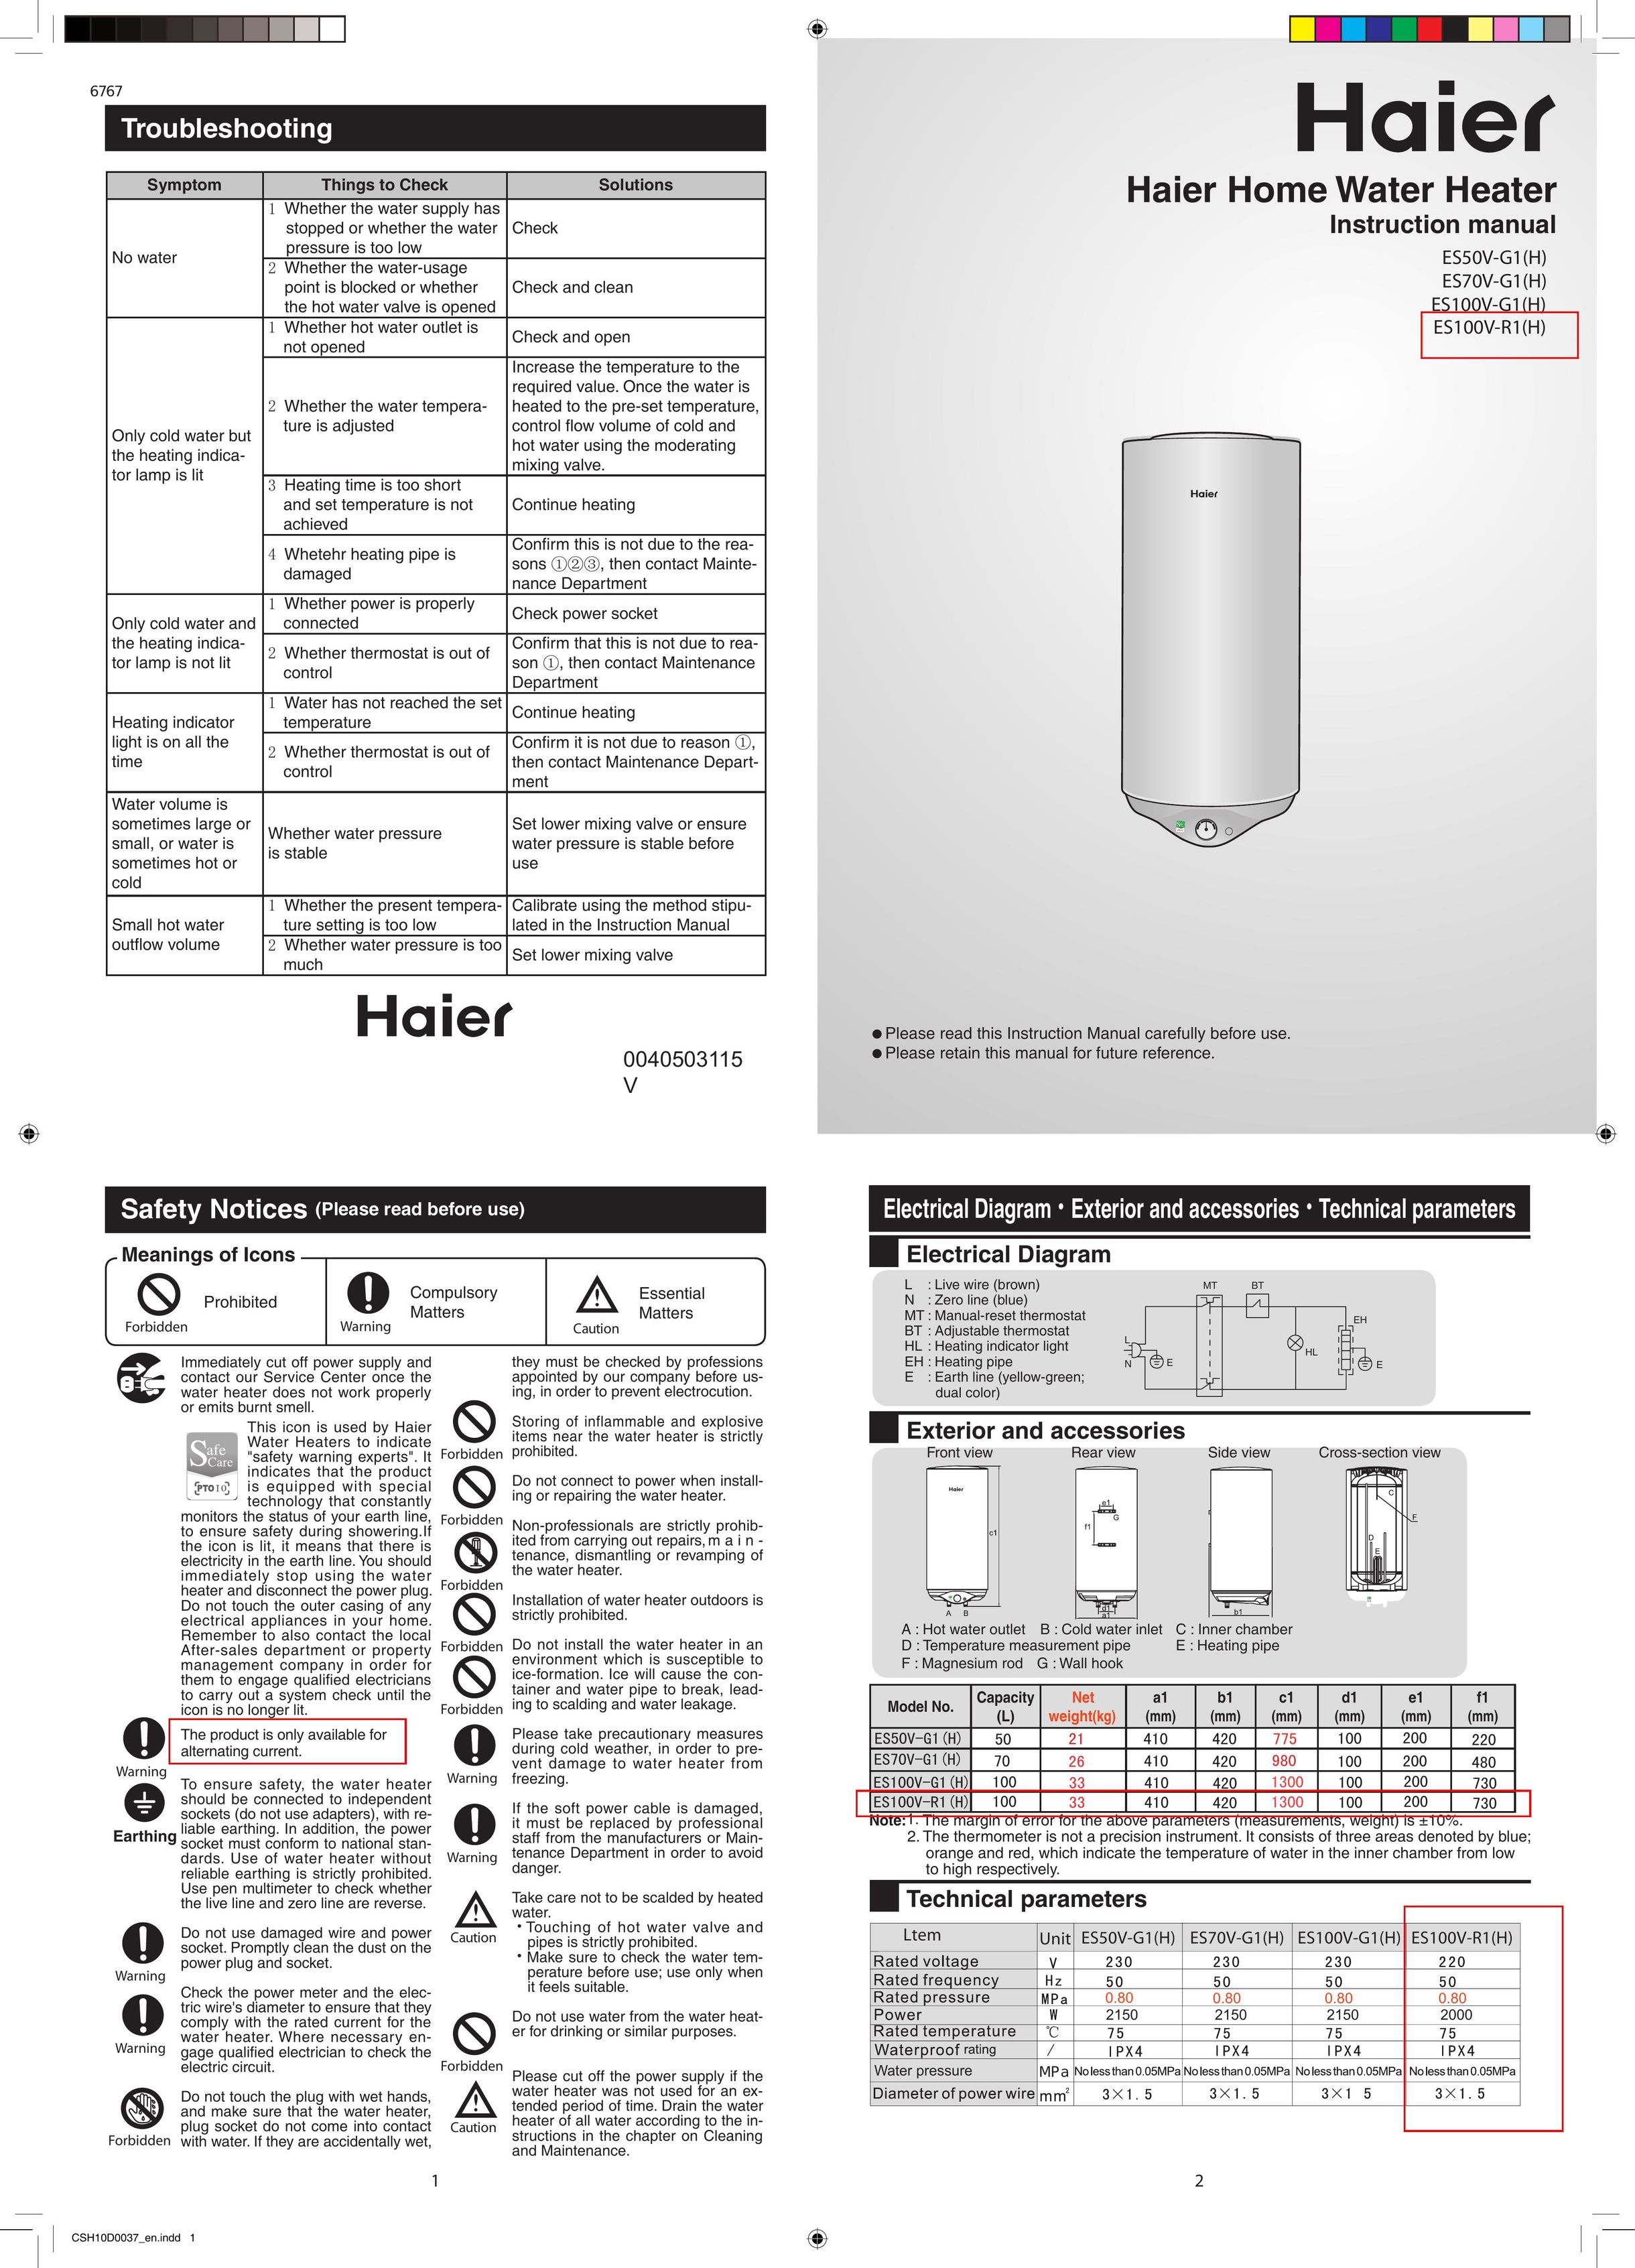 Haier ES100V-G1(H) Water Heater User Manual